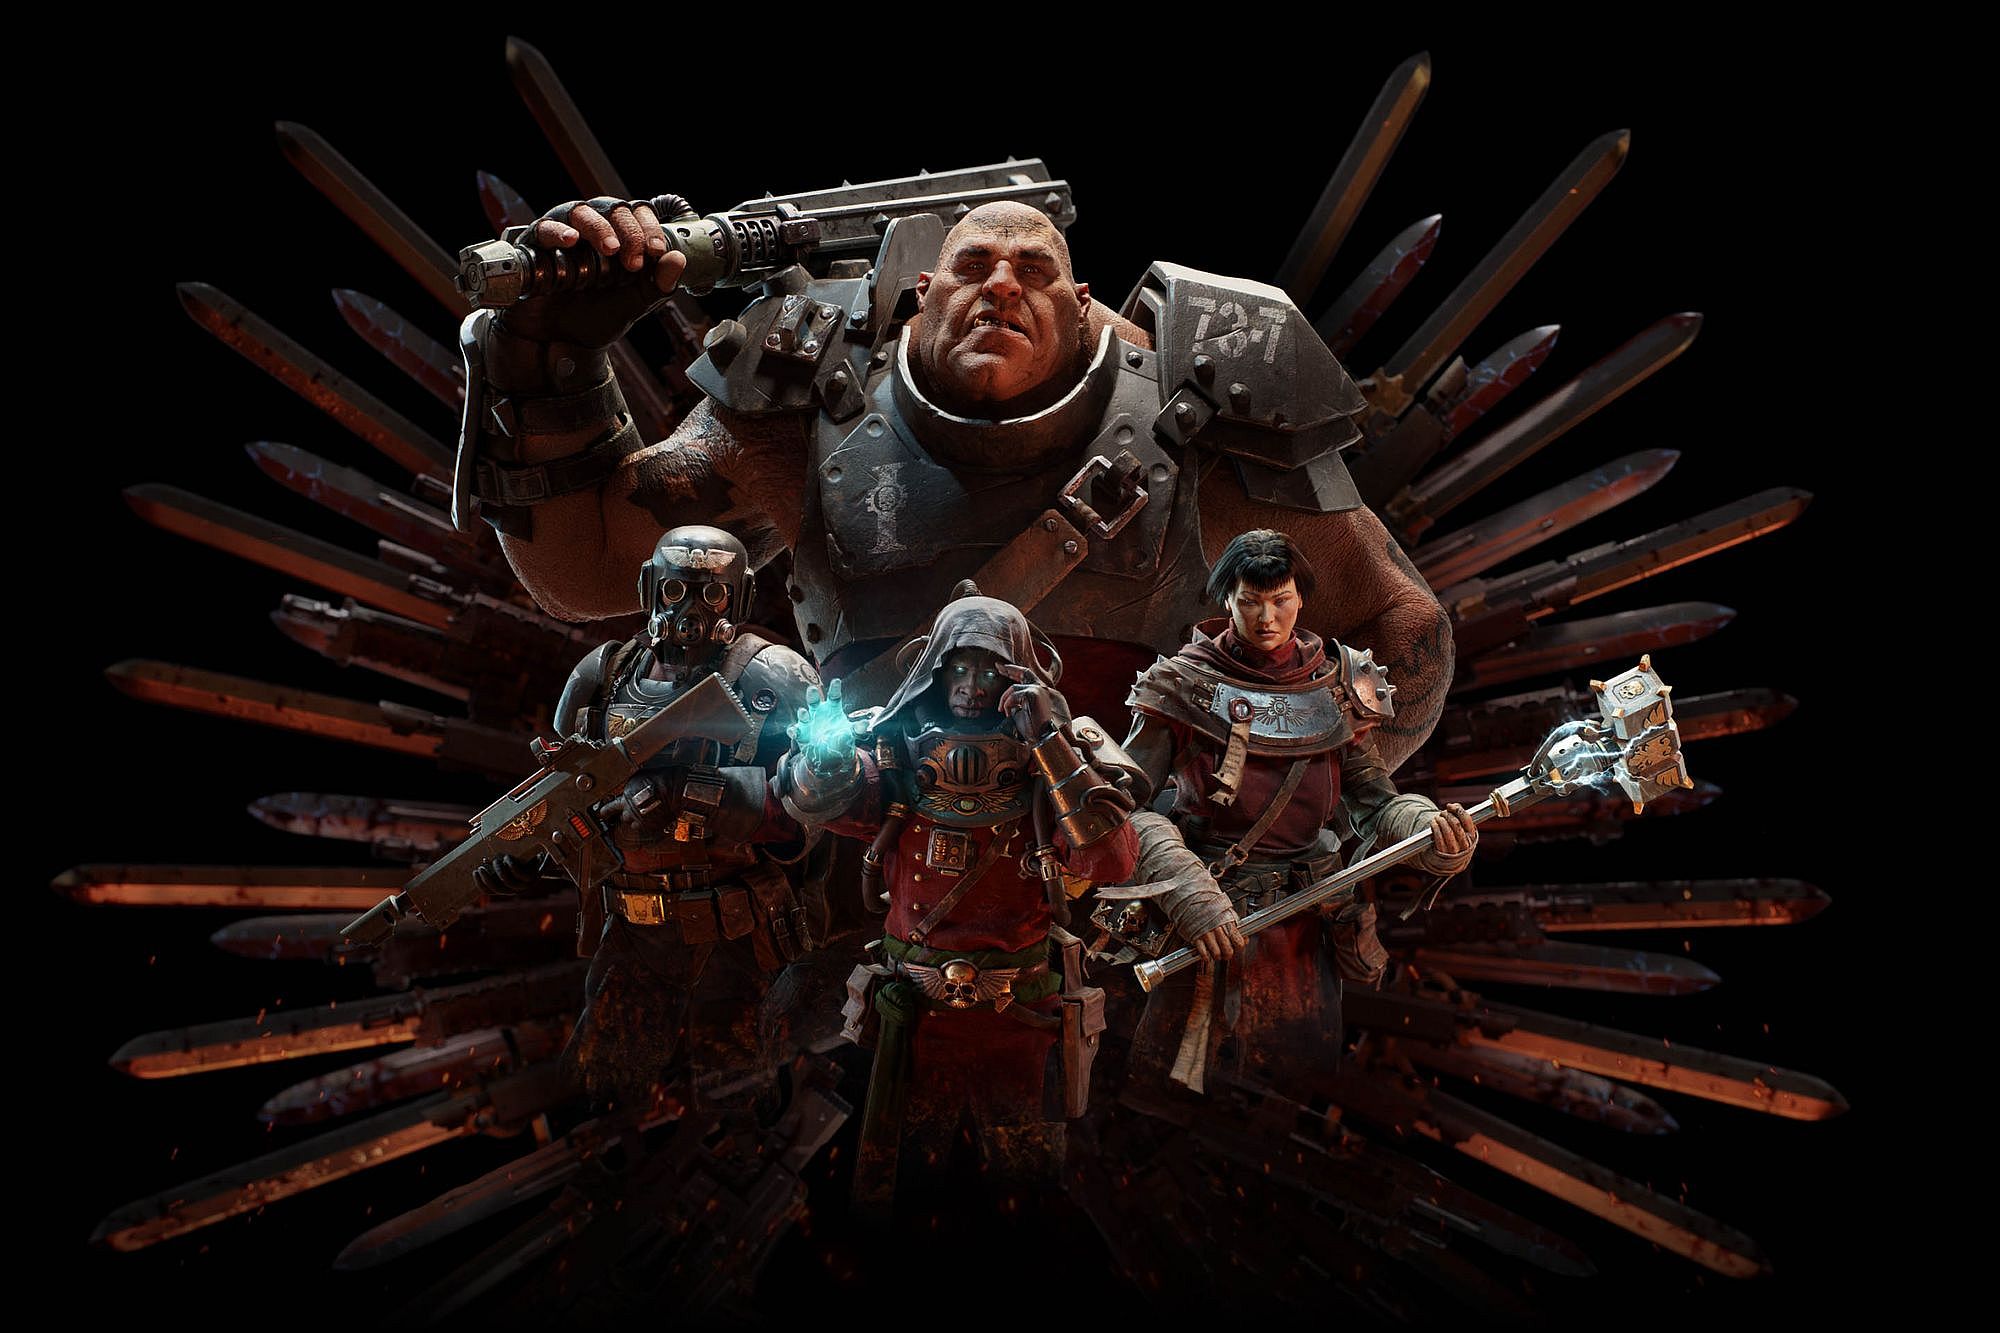 Image for Warhammer 40:000: Darktide Xbox Series X/S release delayed to address feedback